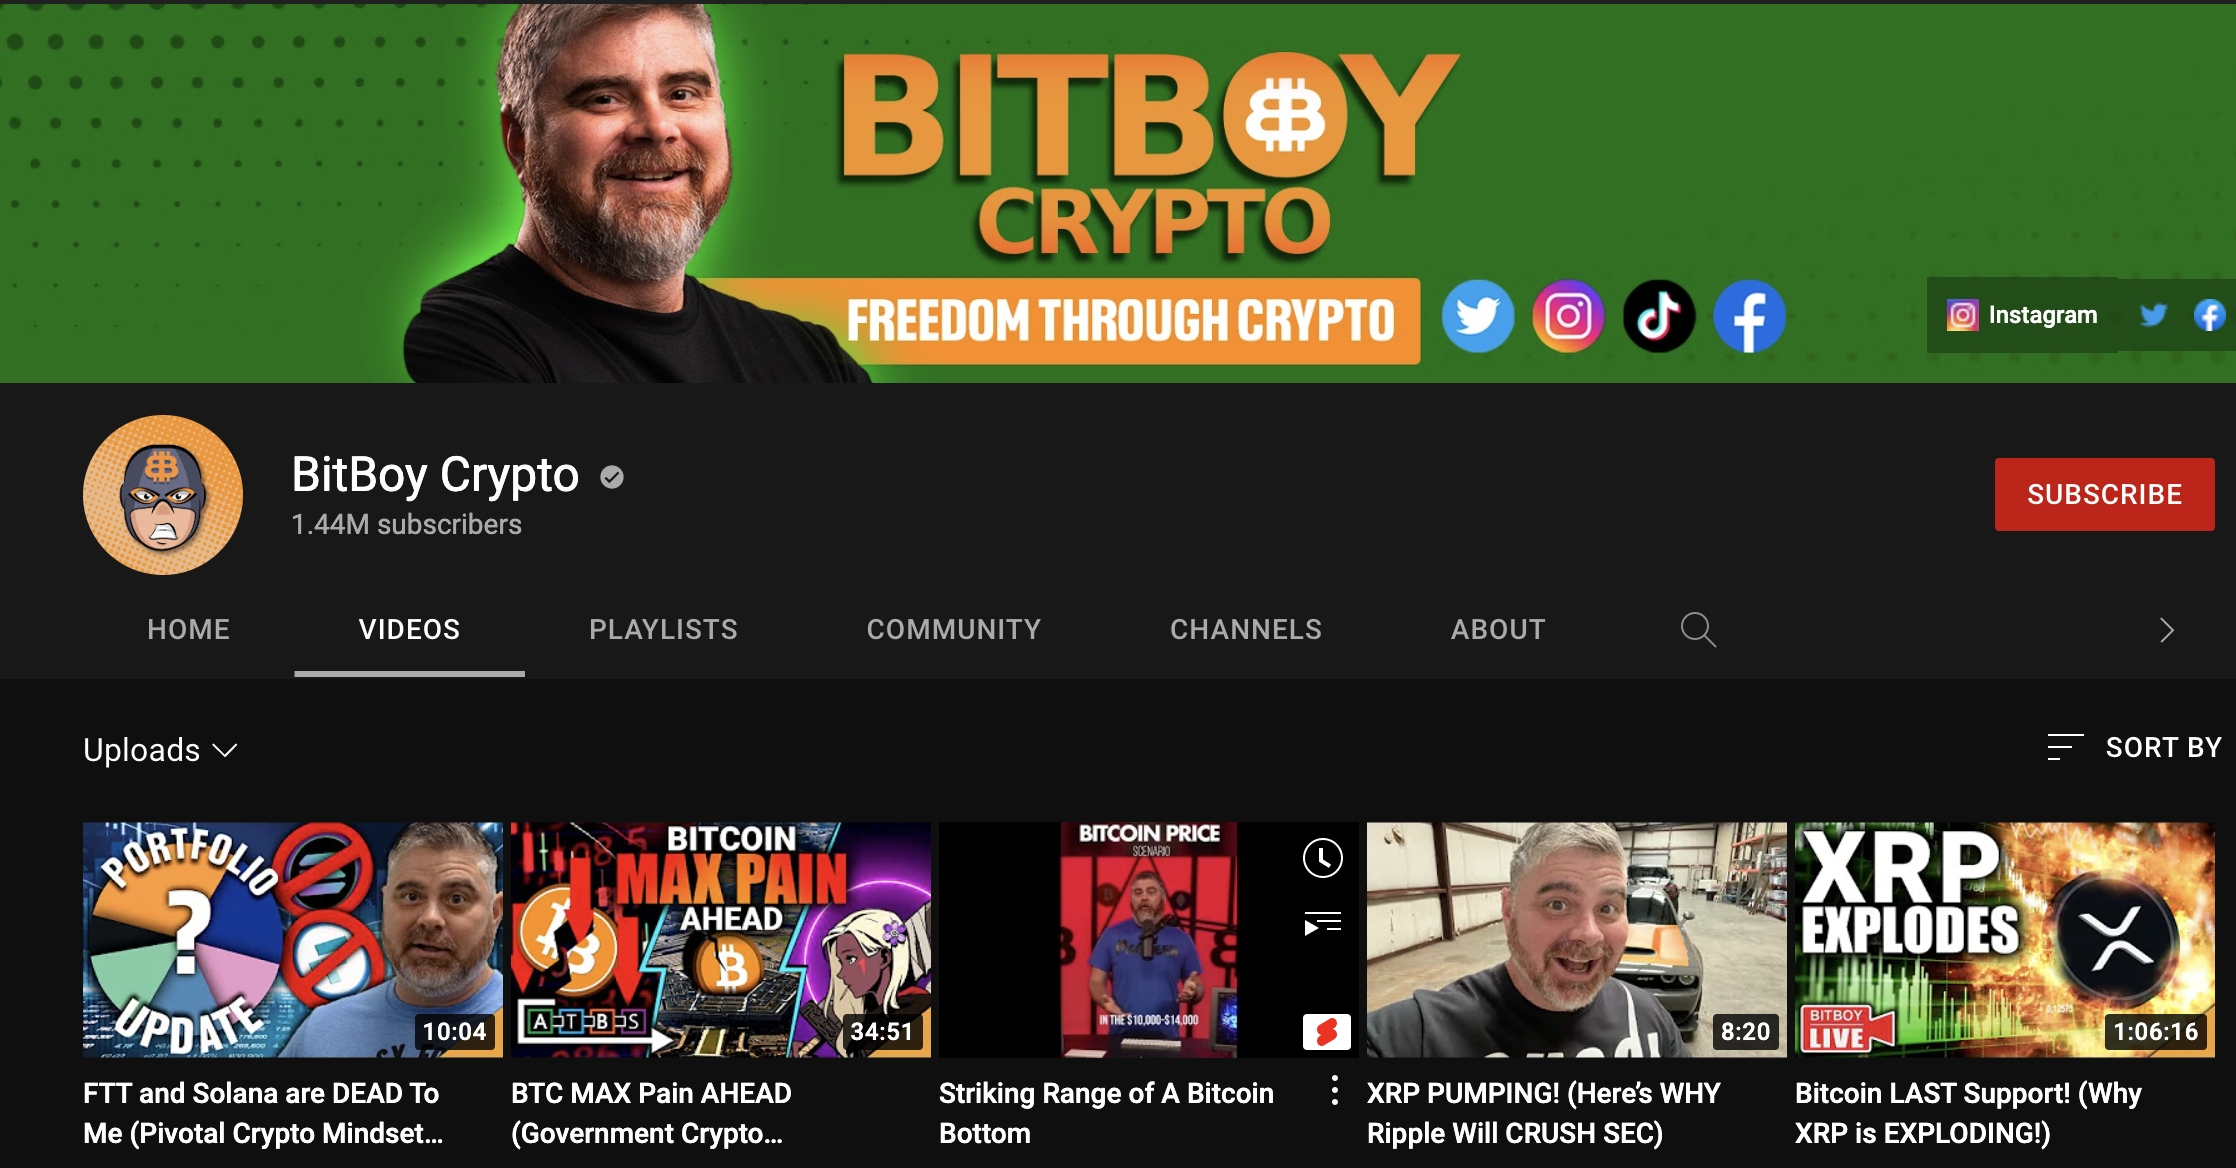 Bitboy Crypto YouTube channel